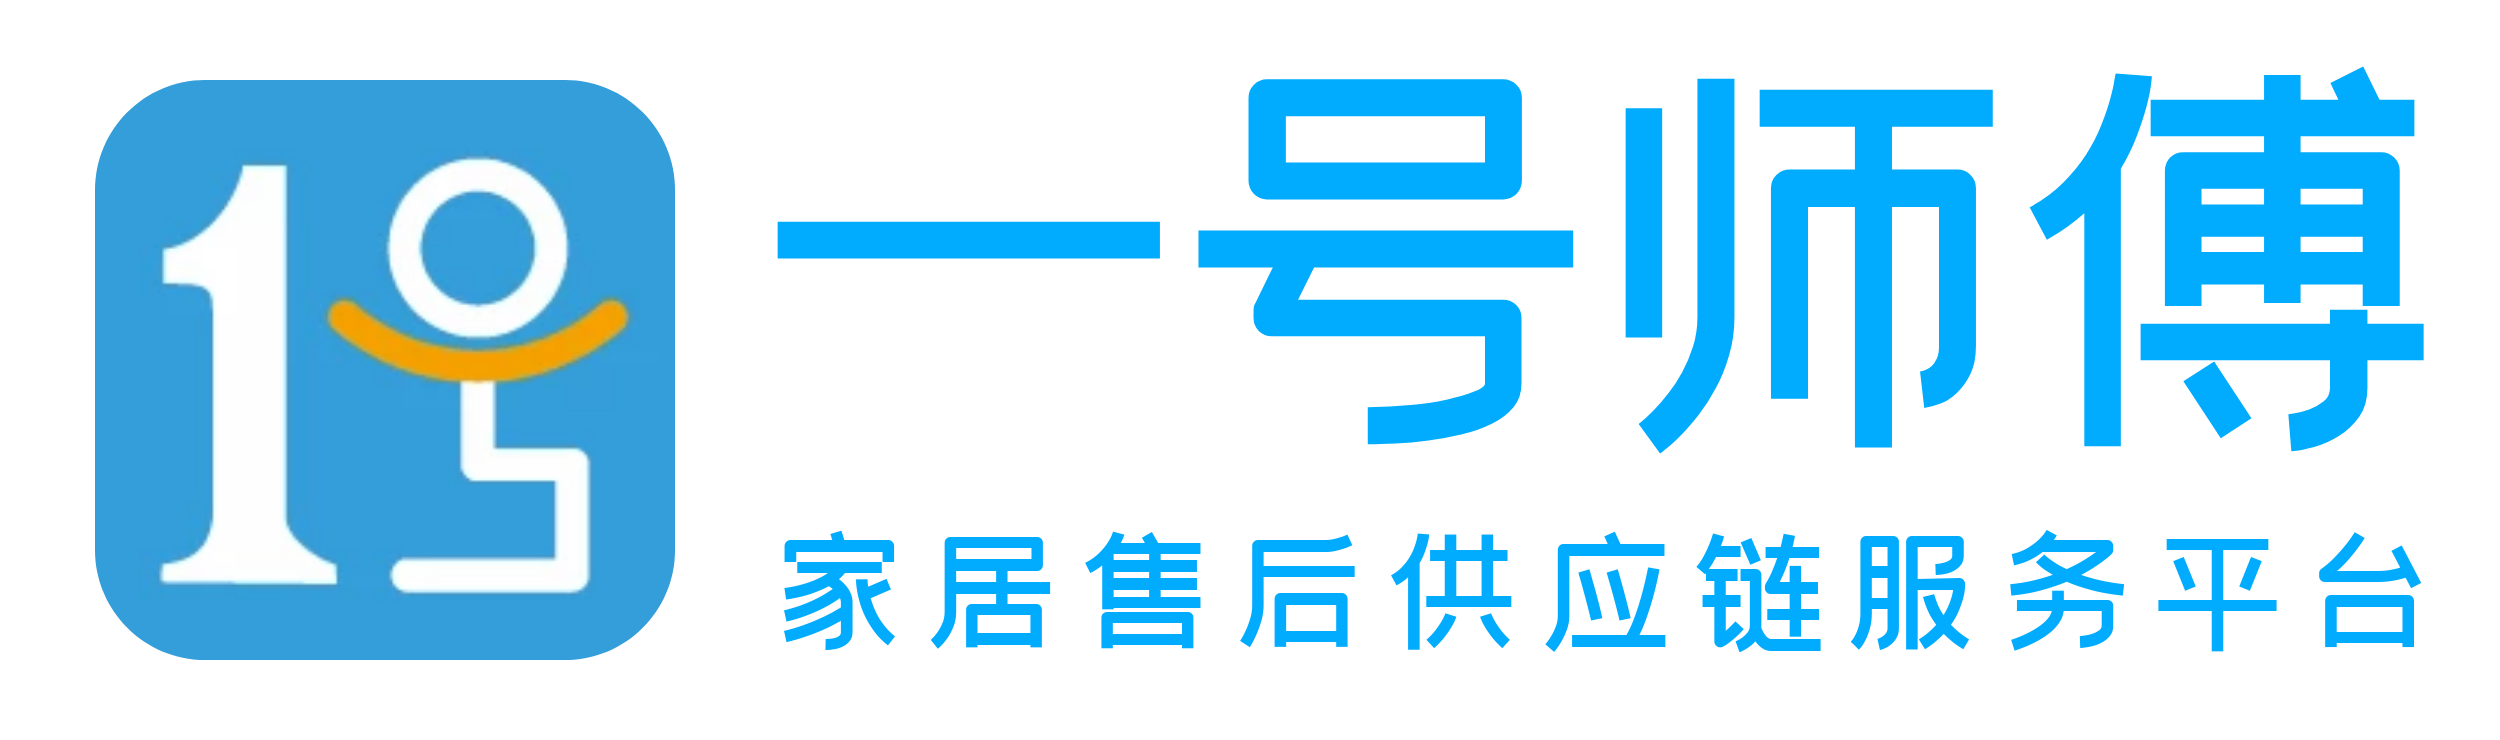 一号师傅logo 2020-蓝.png